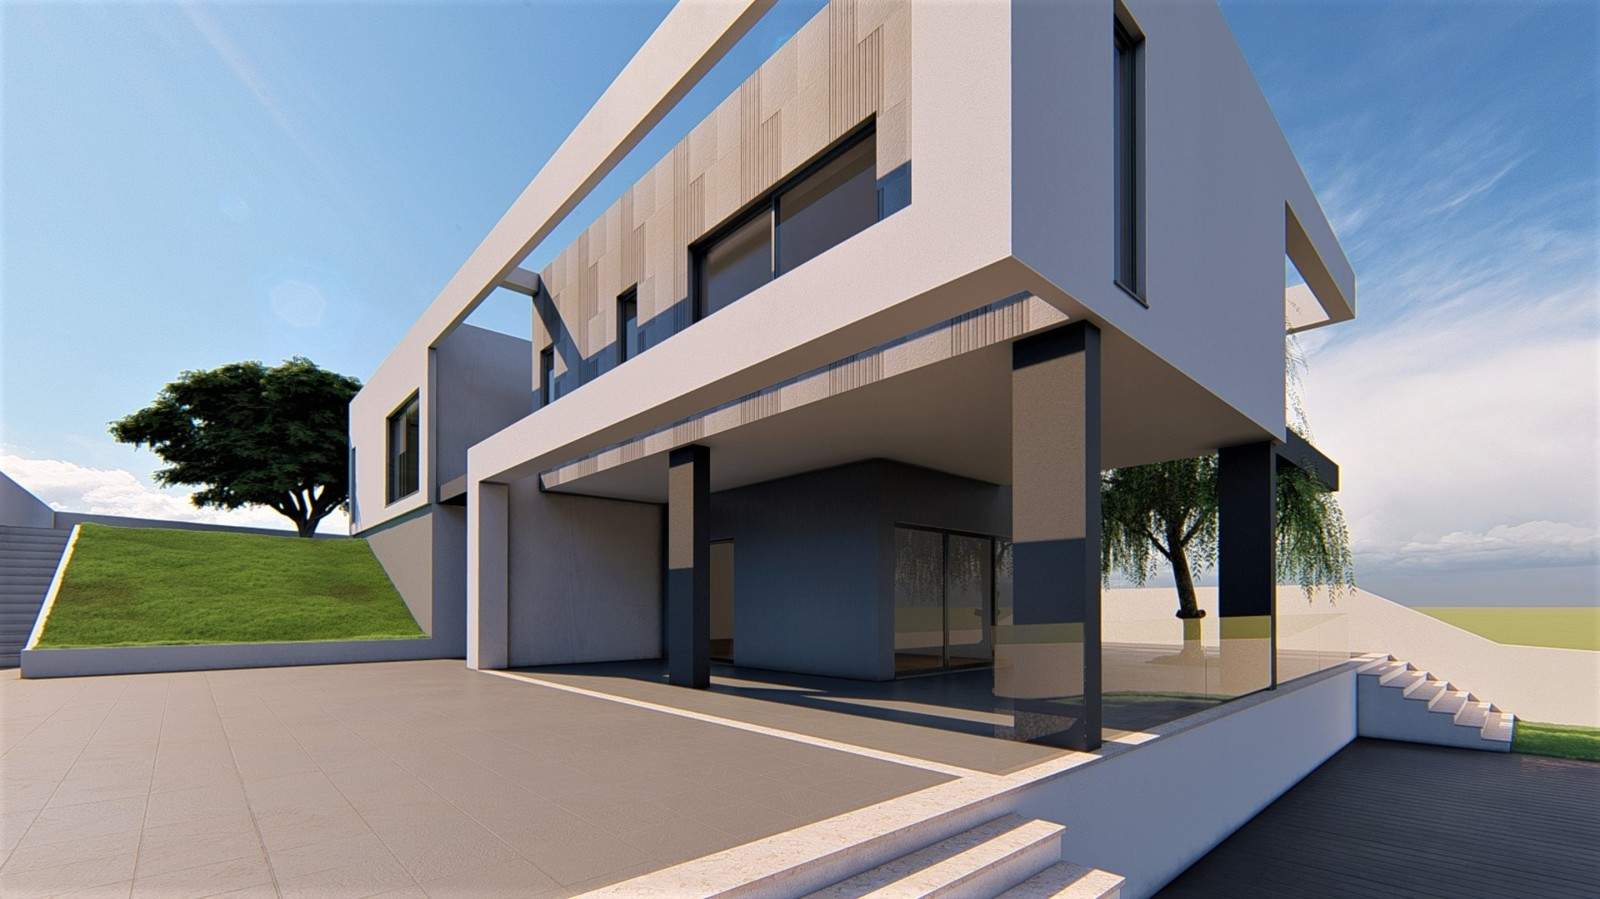 3 bedroom villa under construction for sale, in Vilamoura, Algarve_213467